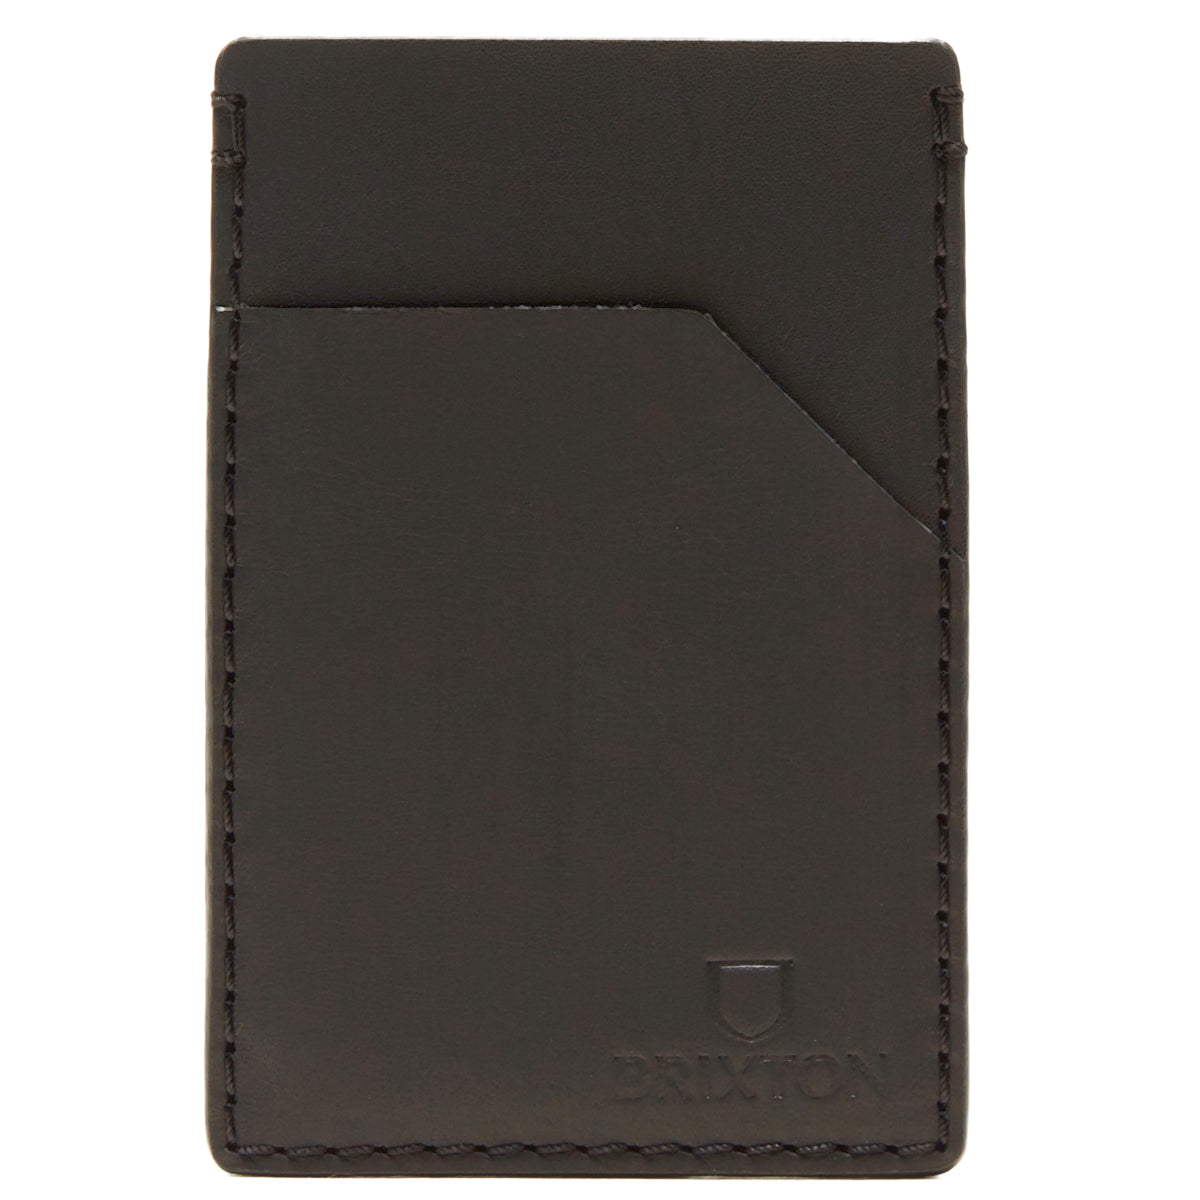 Brixton Traditional Card Holder Wallet - Black image 1